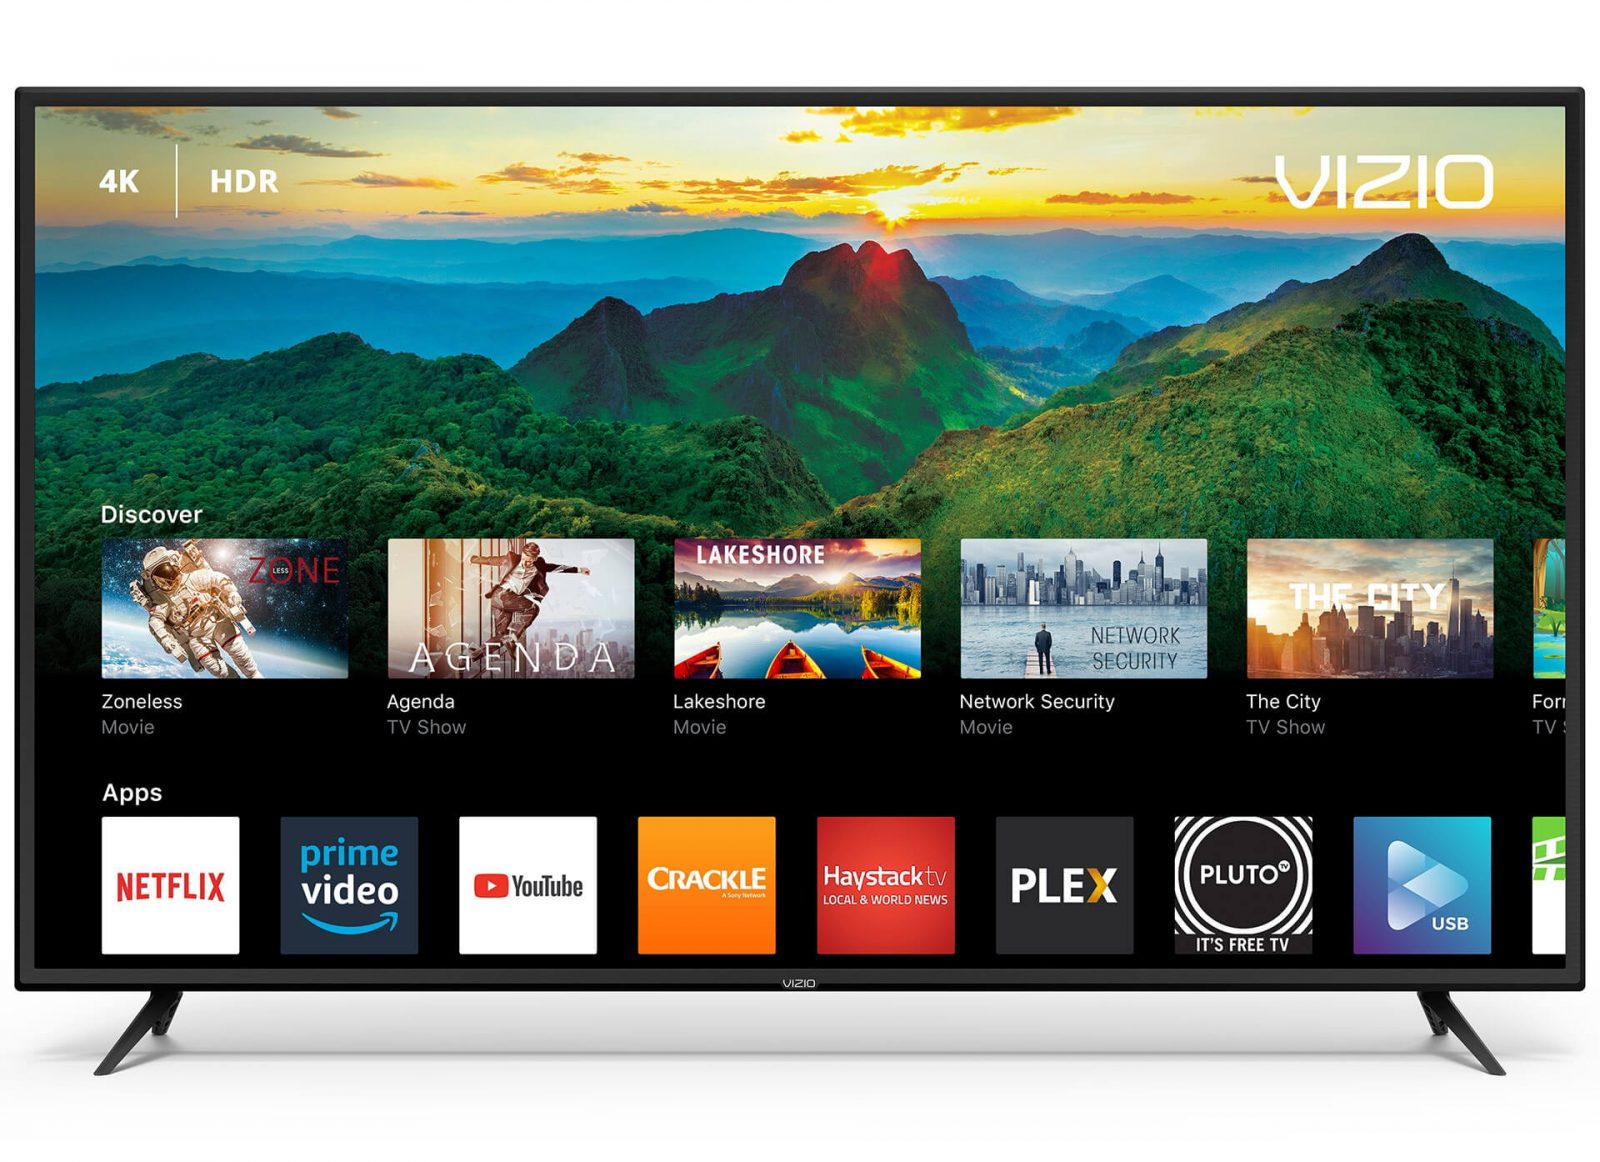 How To Get Xfinity App On Vizio Smart TV